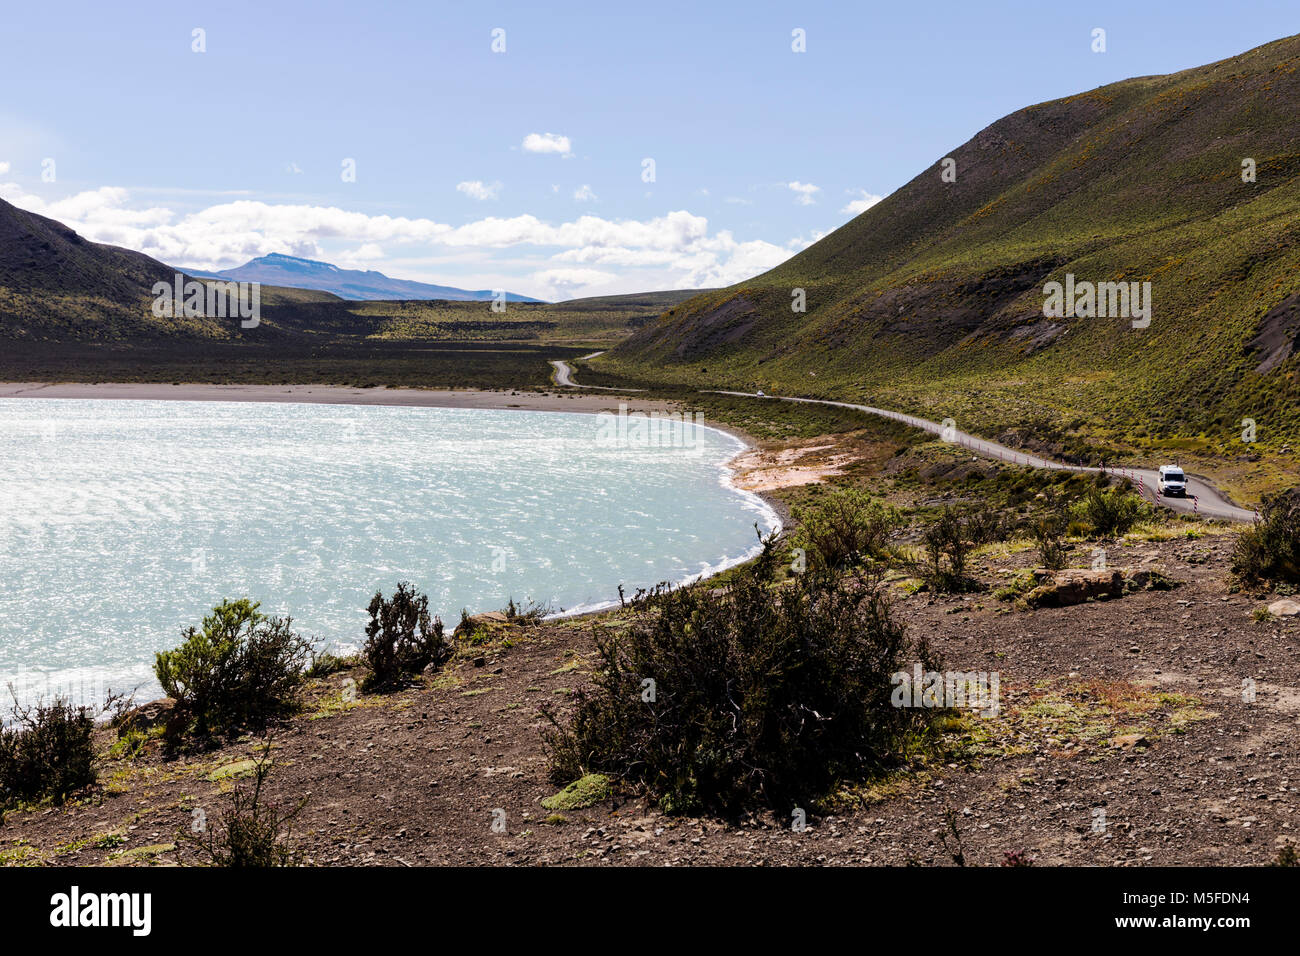 Ghiacciaio lago alimentato a sud di El Calafate; Patagonia Argentina; Foto Stock